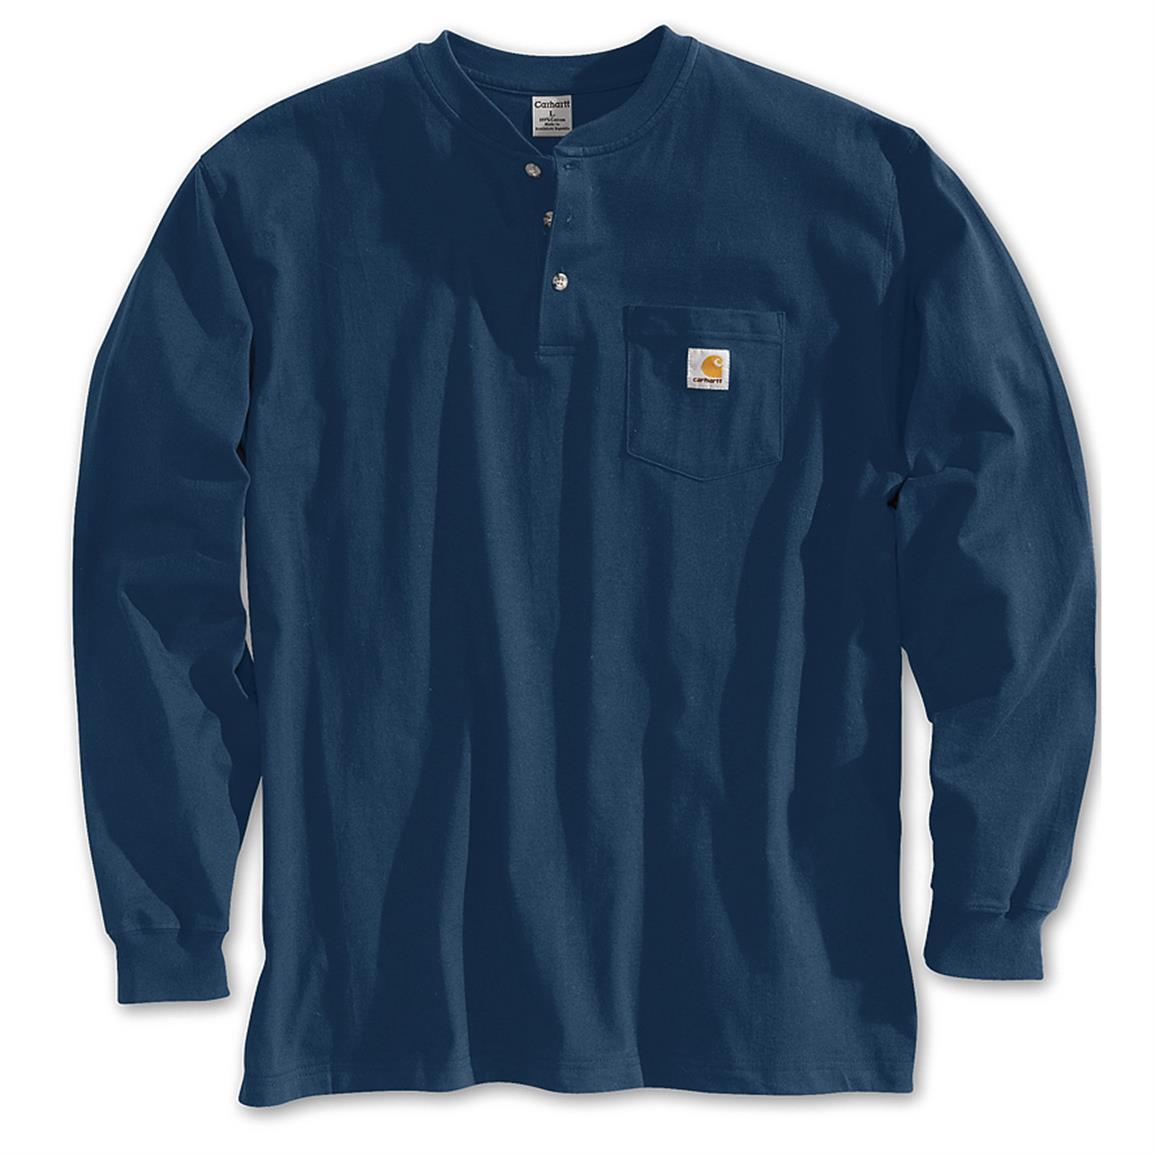 Carhartt Men's Pocket Long-Sleeve Henley Shirt - 623525, T-Shirts at ...